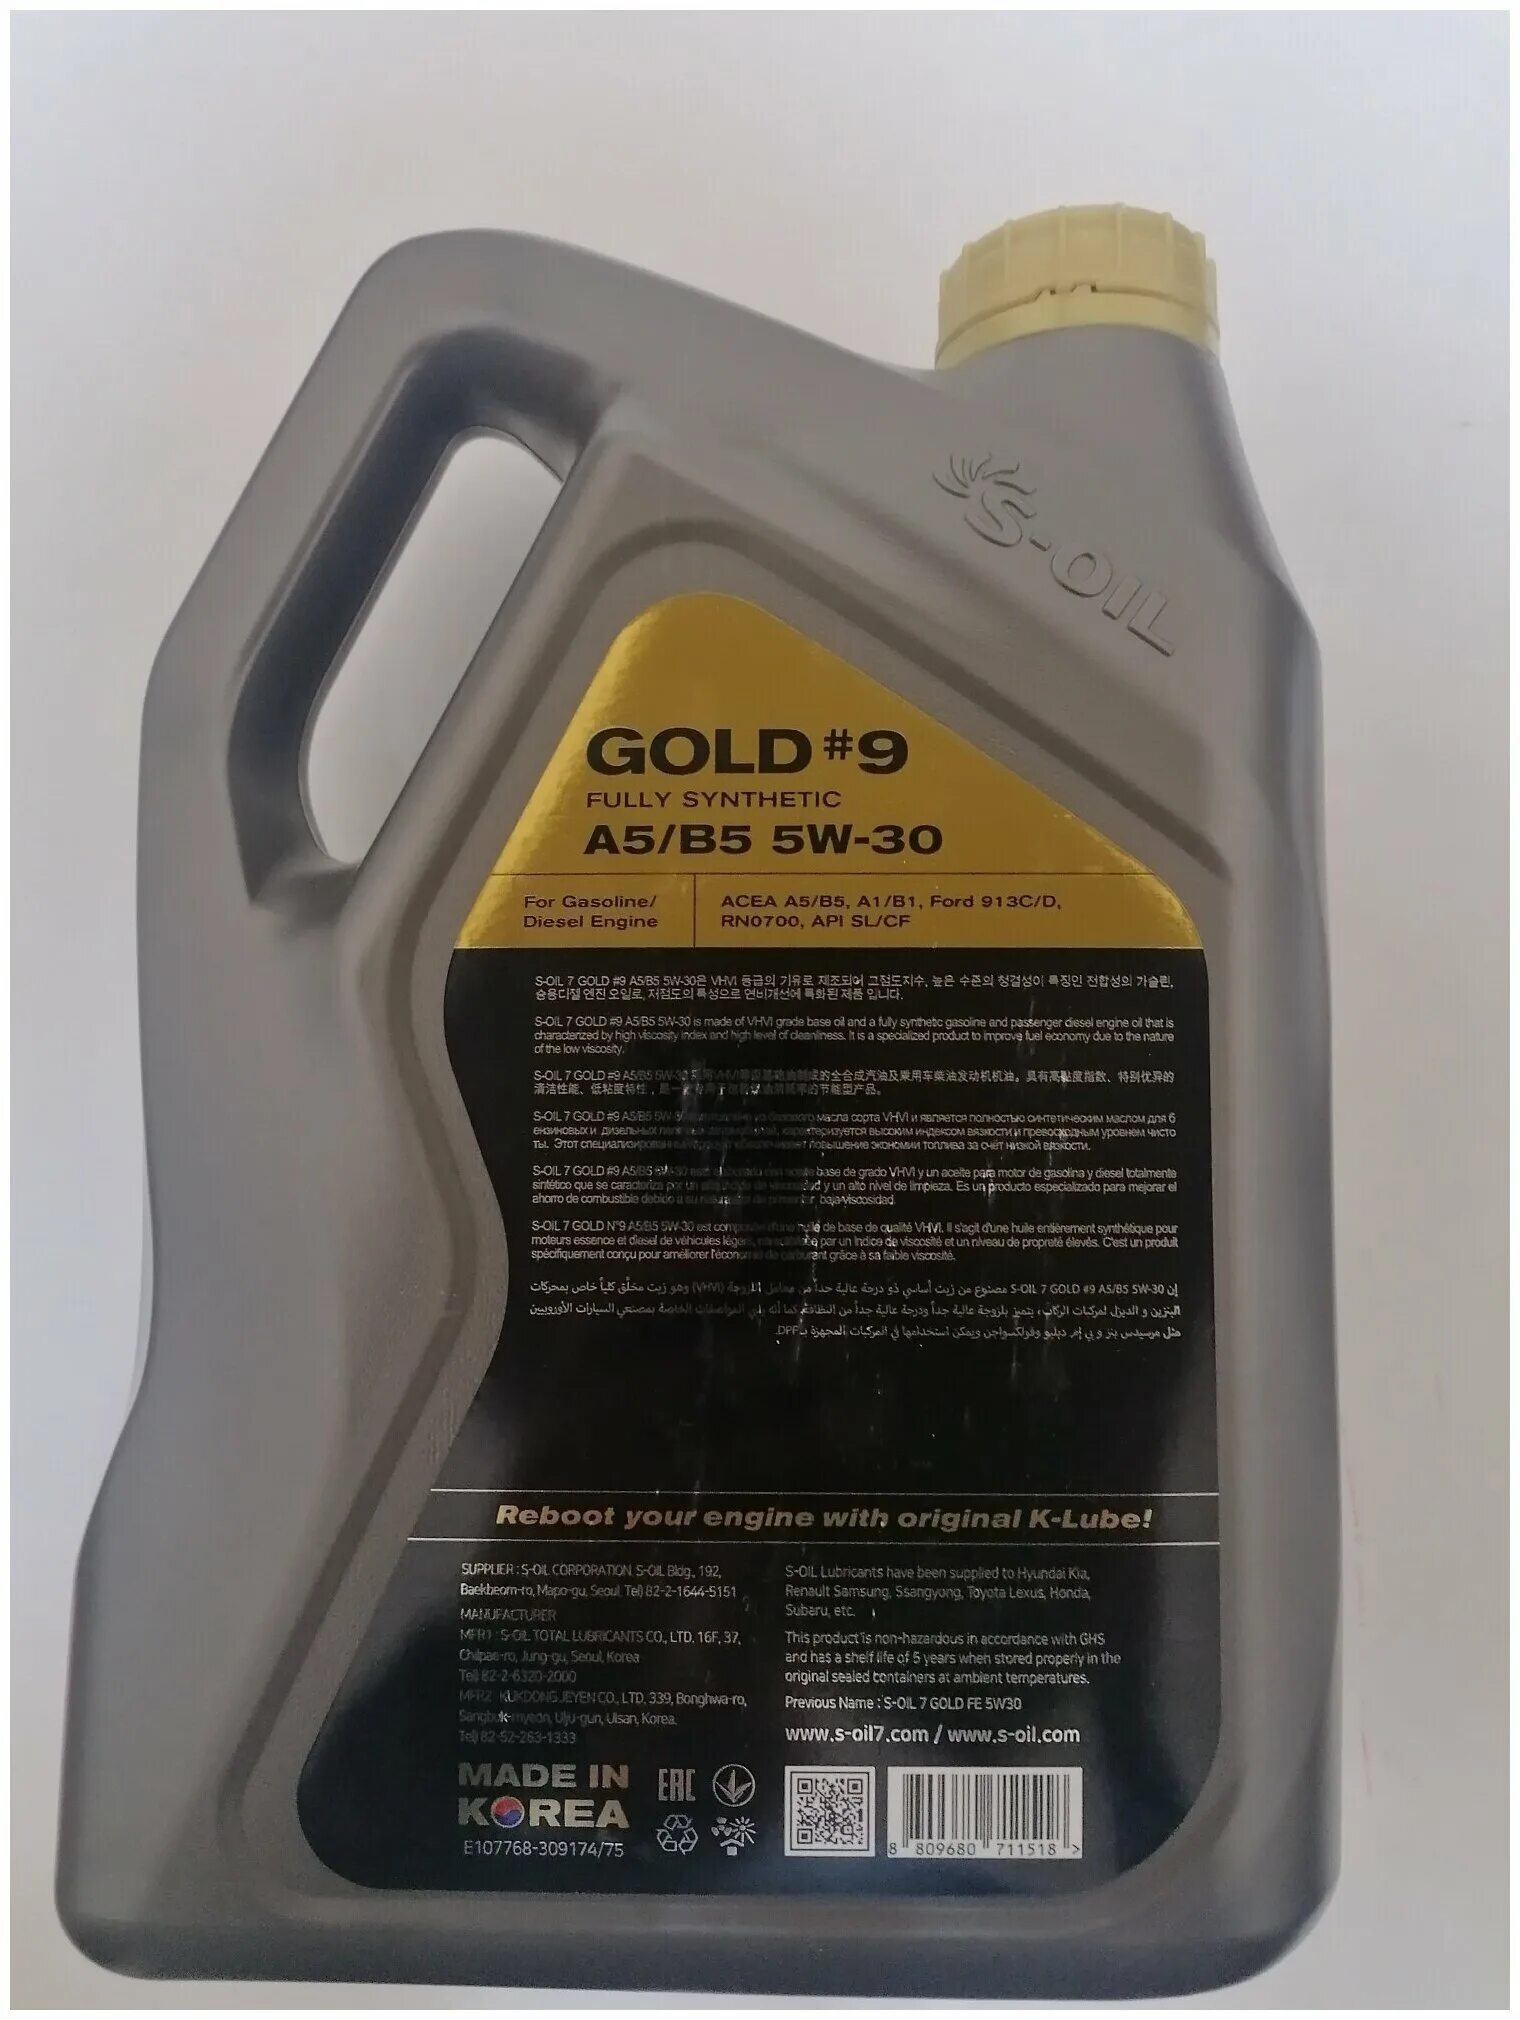 S-Oil Seven Gold #9 5w-30 a5/b5. S-Oil Seven 5w-30 Gold 9. S-Oil Seven Gold 9 5w-30 артикул. Масло s Oil Gold 5w30.